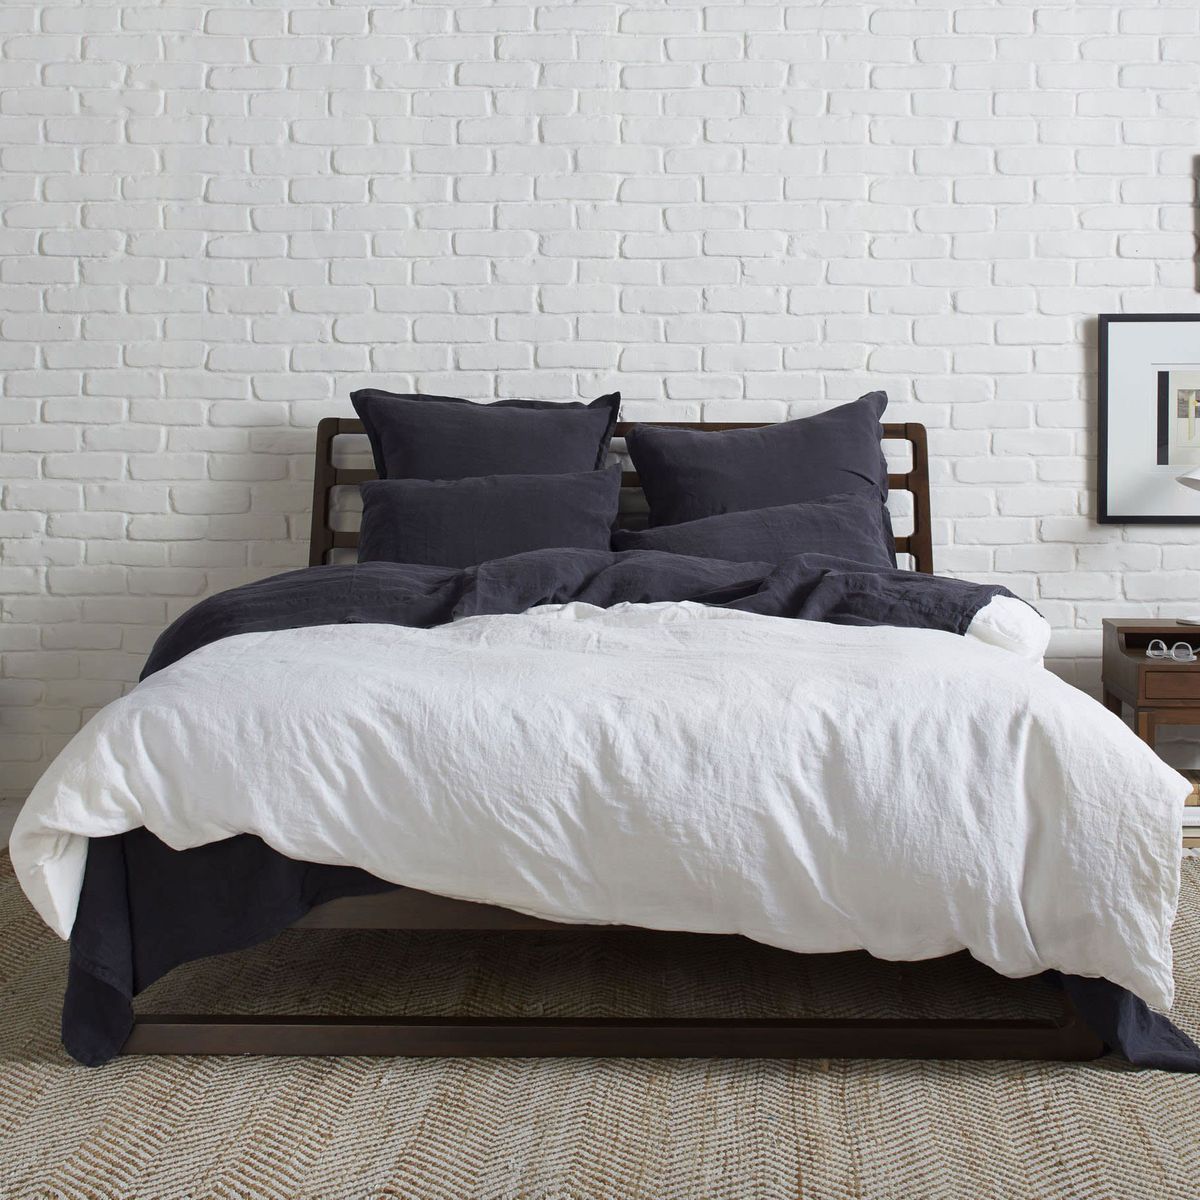 New Gray Printing Bedding Set Duvet Quilt Cover+Sheet+Pillow Case Four-Piece Hot 